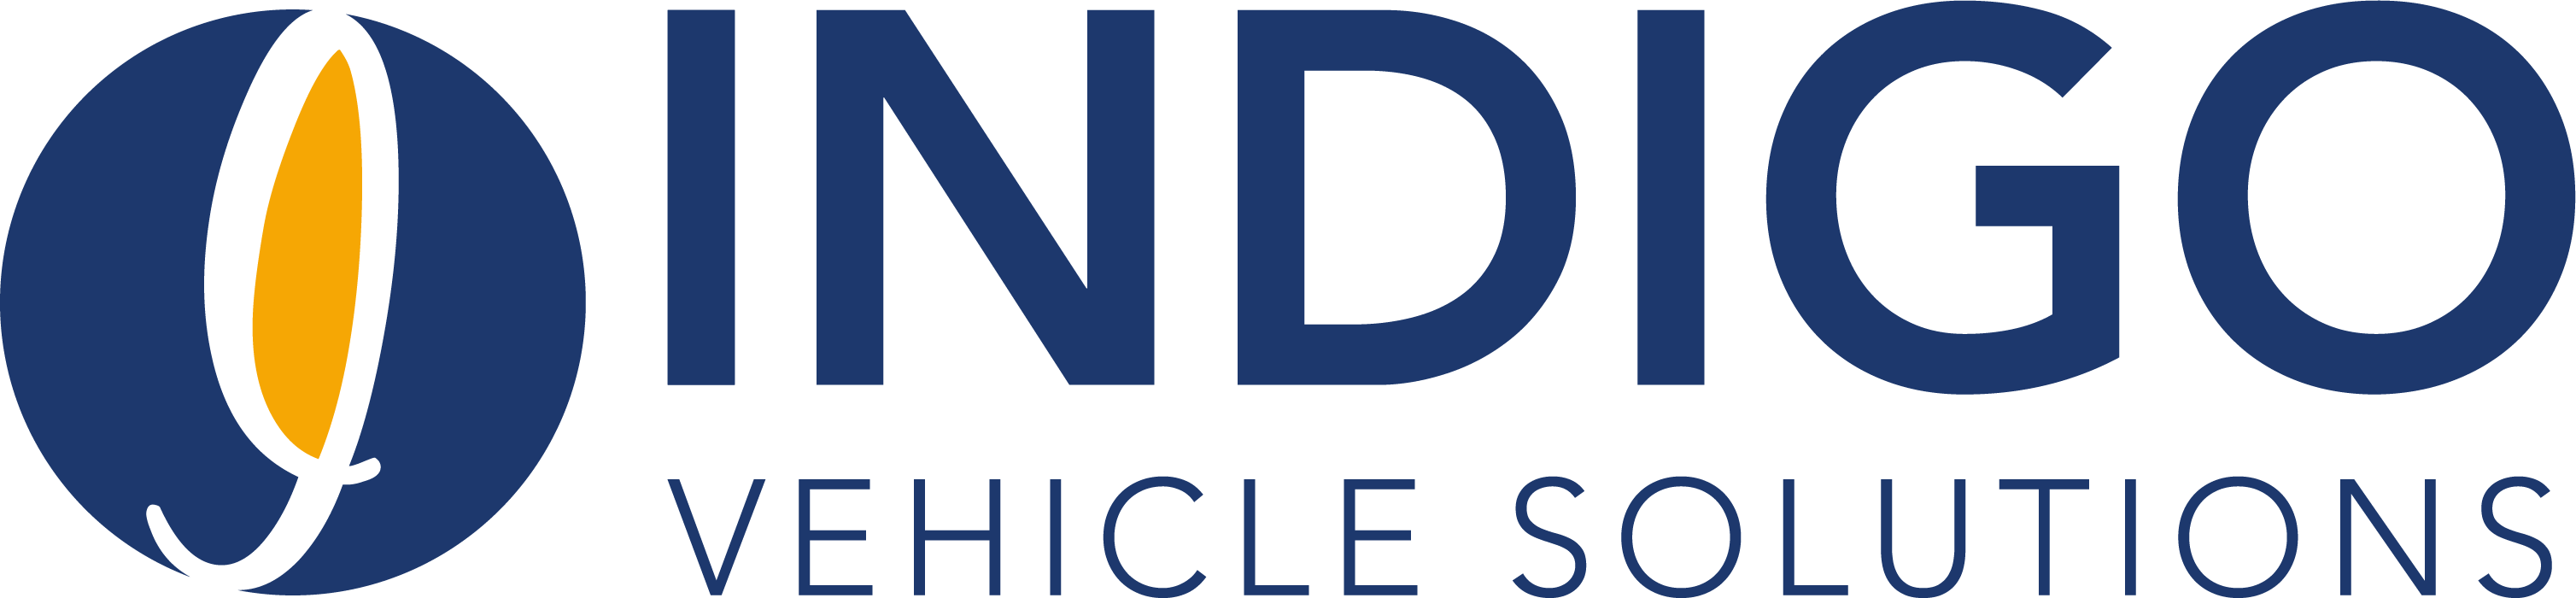 Indigo Vehicle Solutions